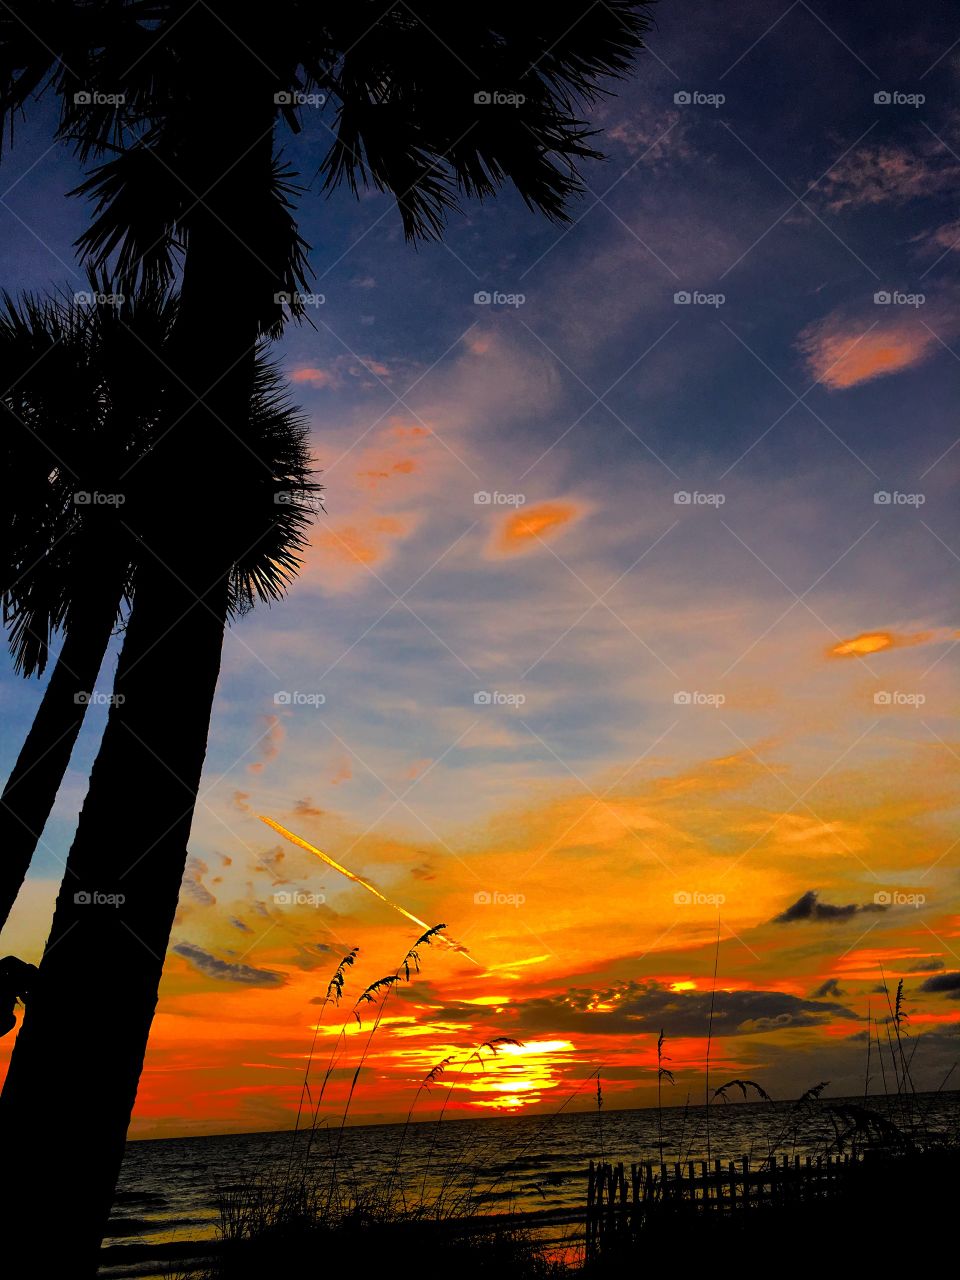 Incredible sunset in Florida